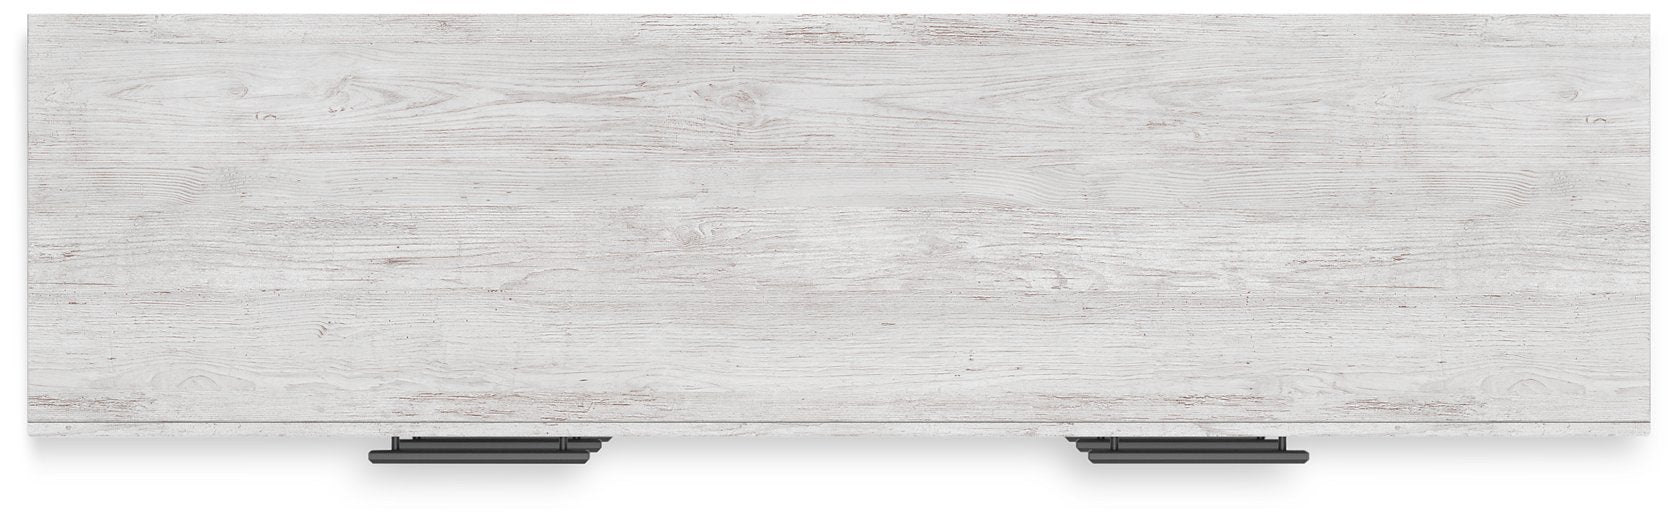 Cayboni Dresser and Mirror - All Brands Furniture (NJ)